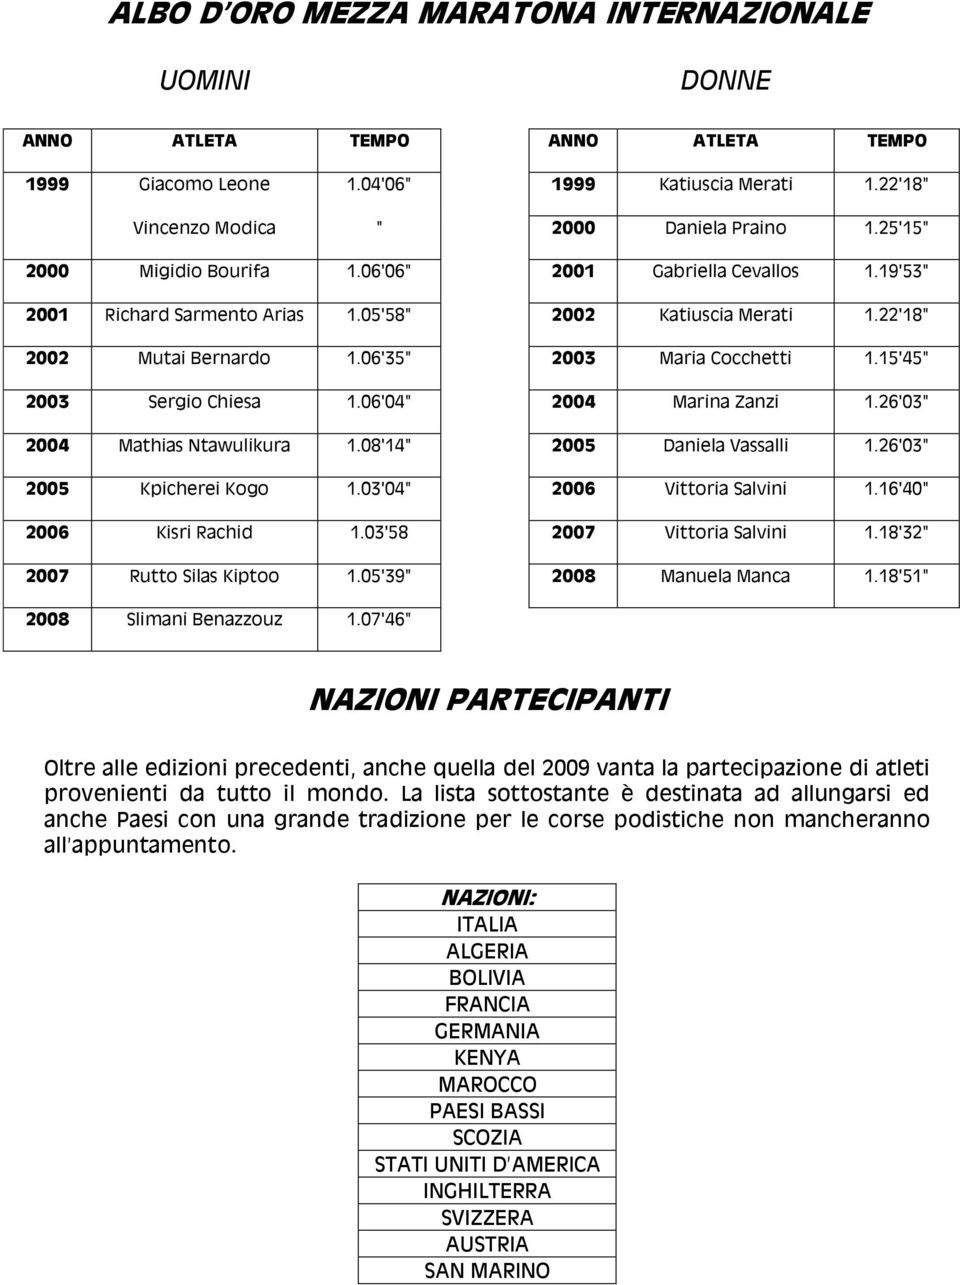 15'45" 2003 Sergio Chiesa 1.06'04" 2004 Marina Zanzi 1.26'03" 2004 Mathias Ntawulikura 1.08'14" 2005 Daniela Vassalli 1.26'03" 2005 Kpicherei Kogo 1.03'04" 2006 Vittoria Salvini 1.